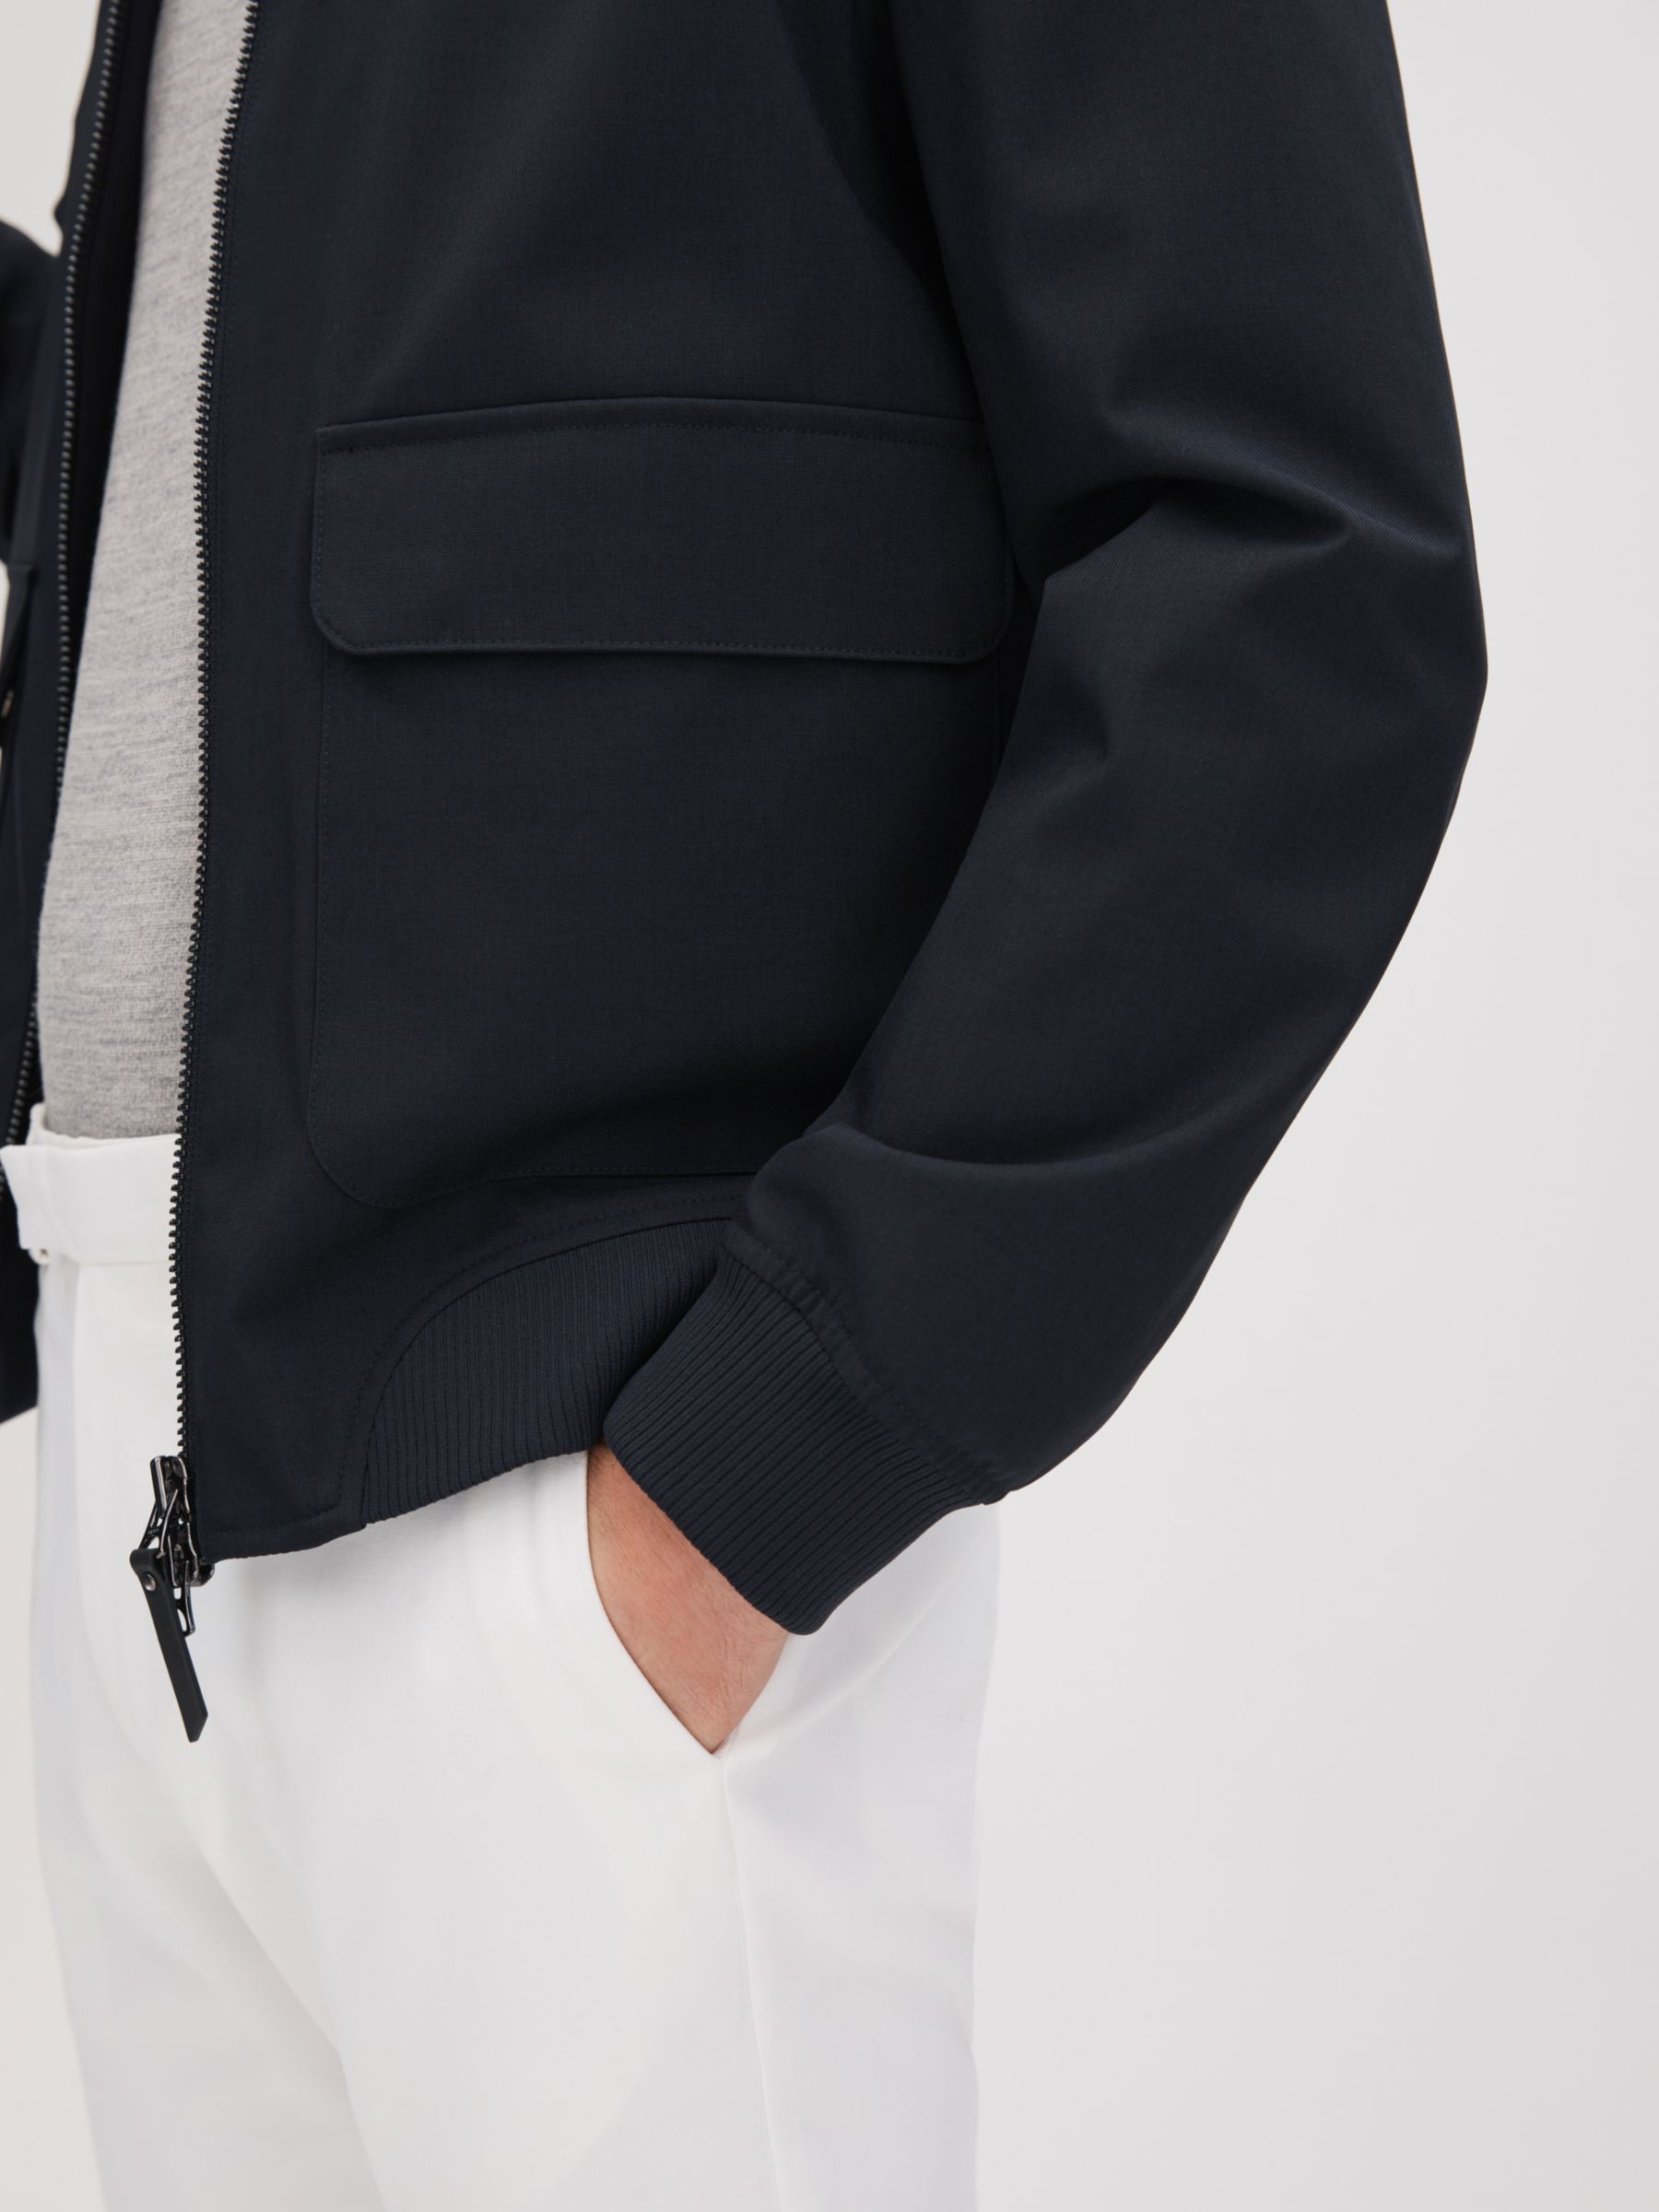 Reiss Rufus Long Sleeve Zip Through Jacket, Navy, XS